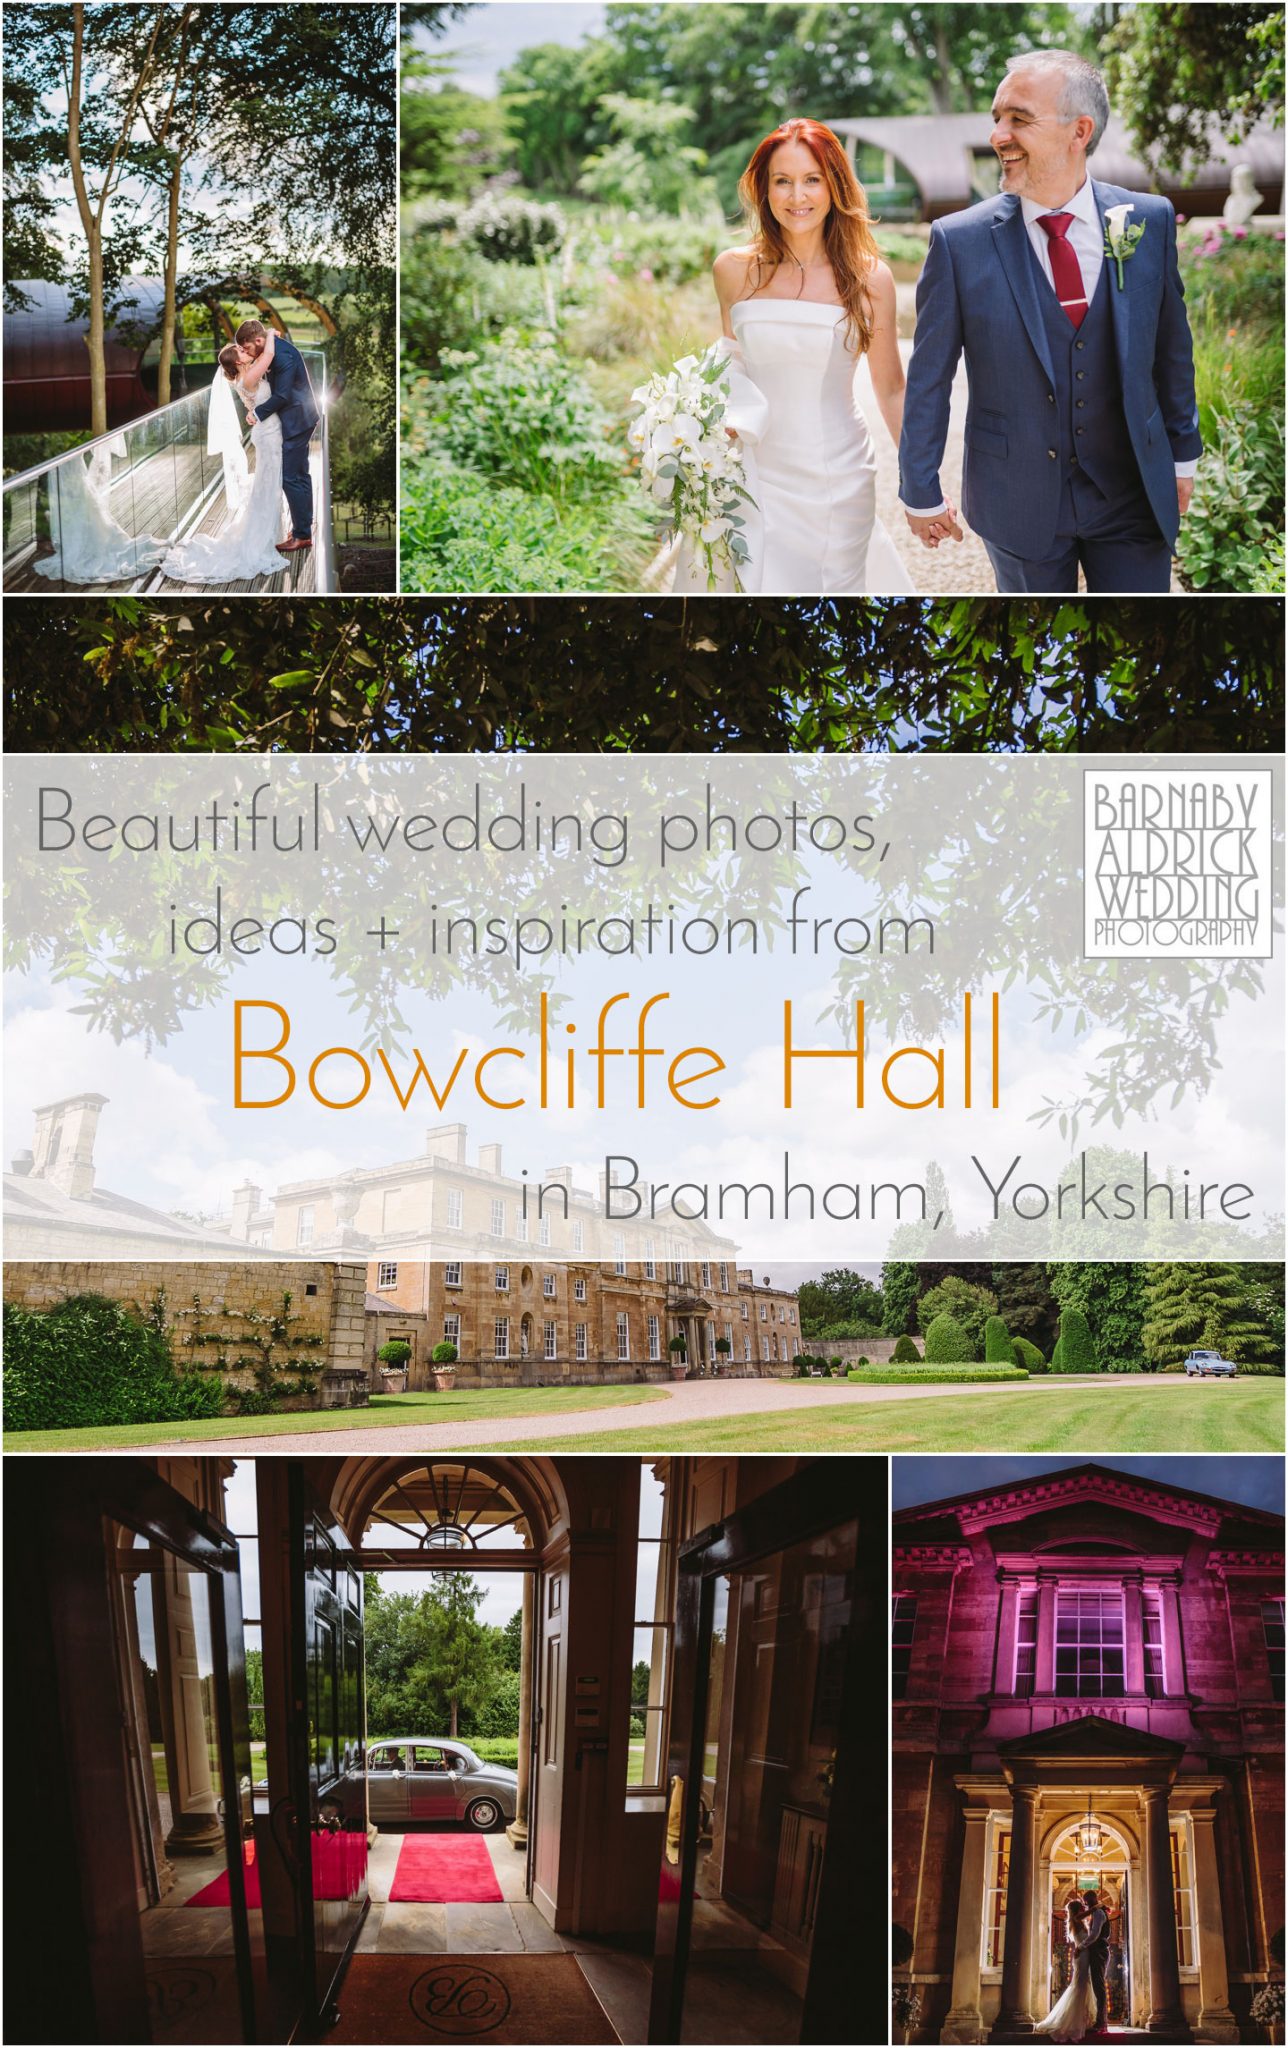 Bowcliffe Hall wedding photos in Bramham Yorkshire by photographer Barnaby Aldrick